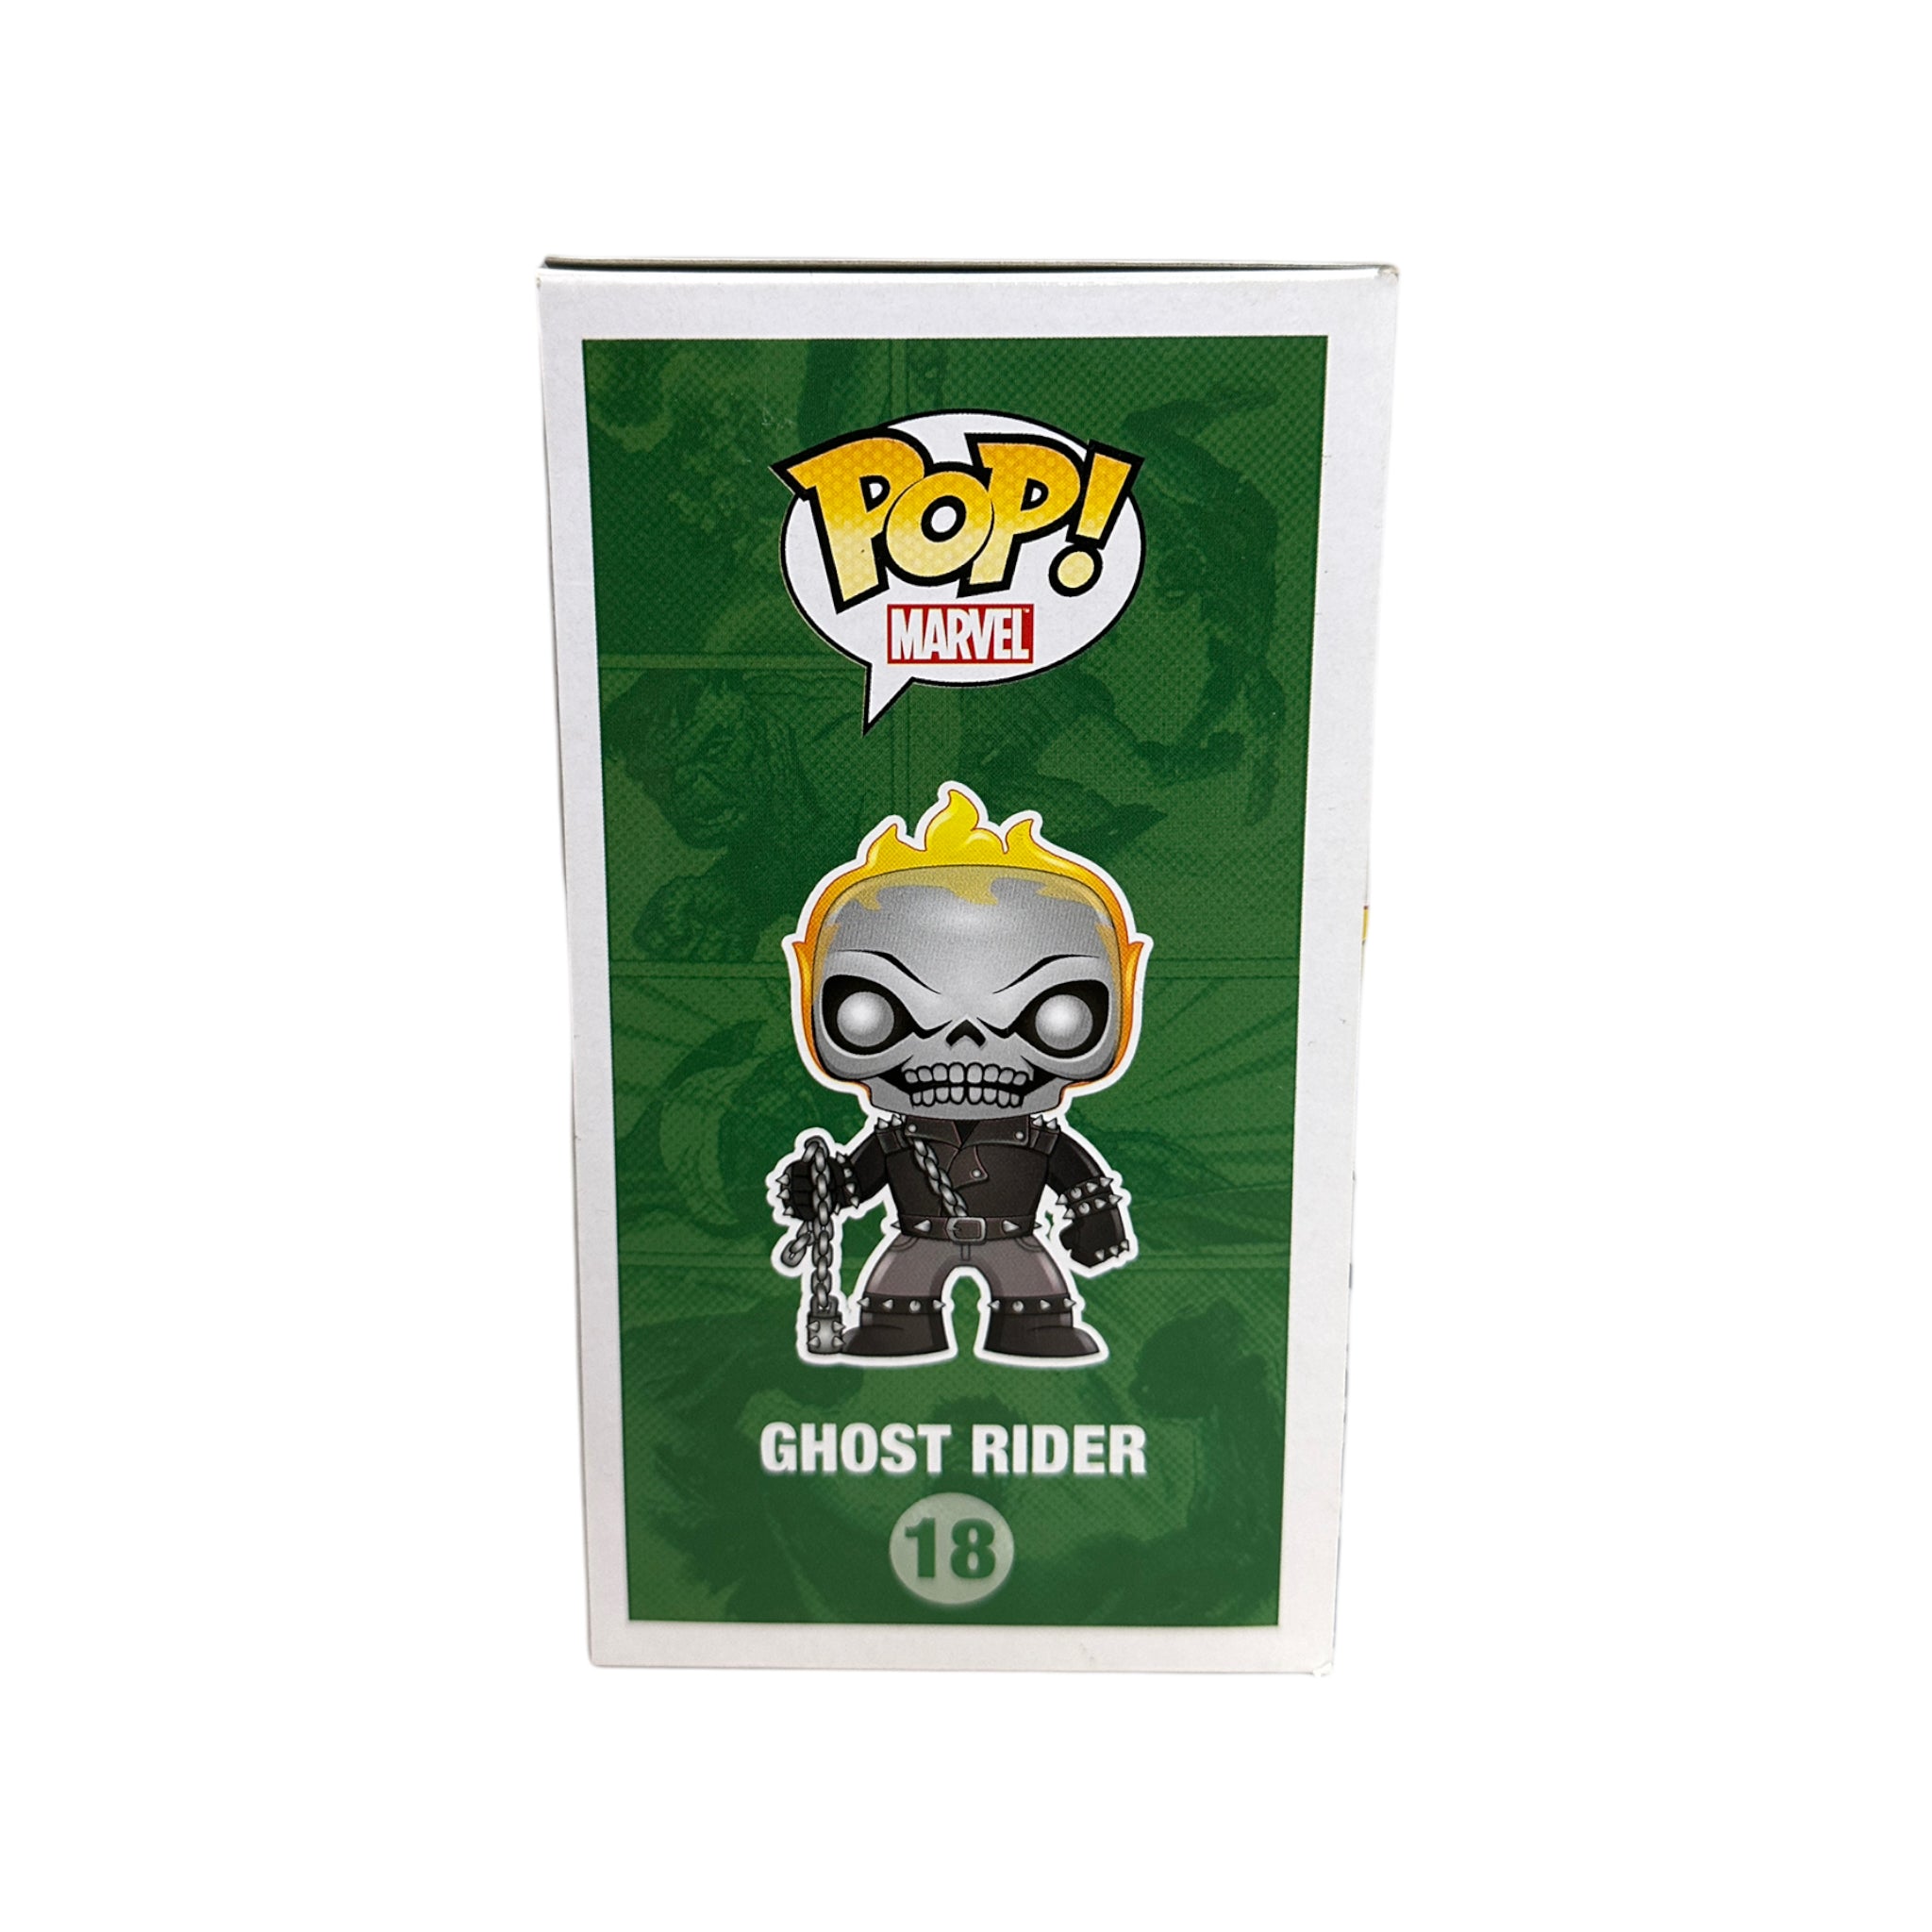 Ghost Rider #18 Funko Pop! - Marvel Universe - 2014 Pop! - Condition 6/10